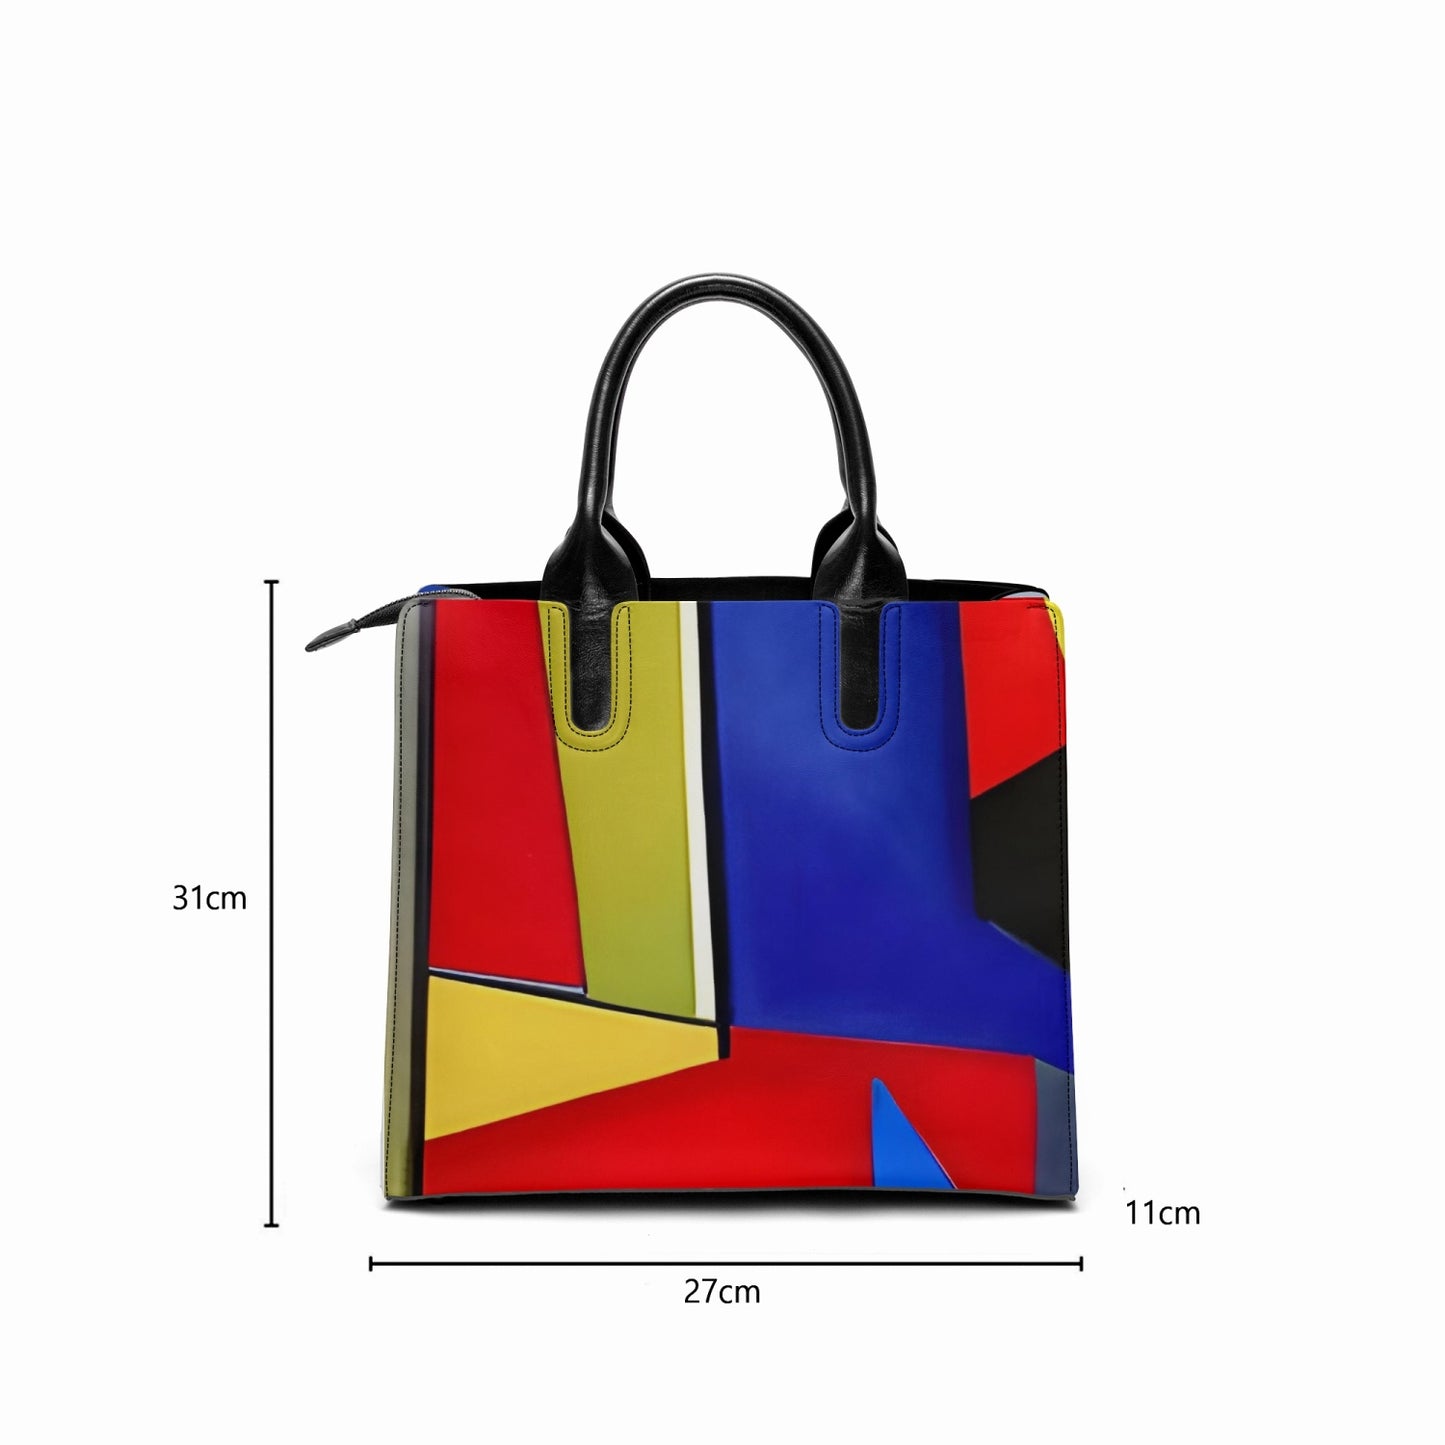 724. Concise U-shaped Handle Tote Bag HOPE